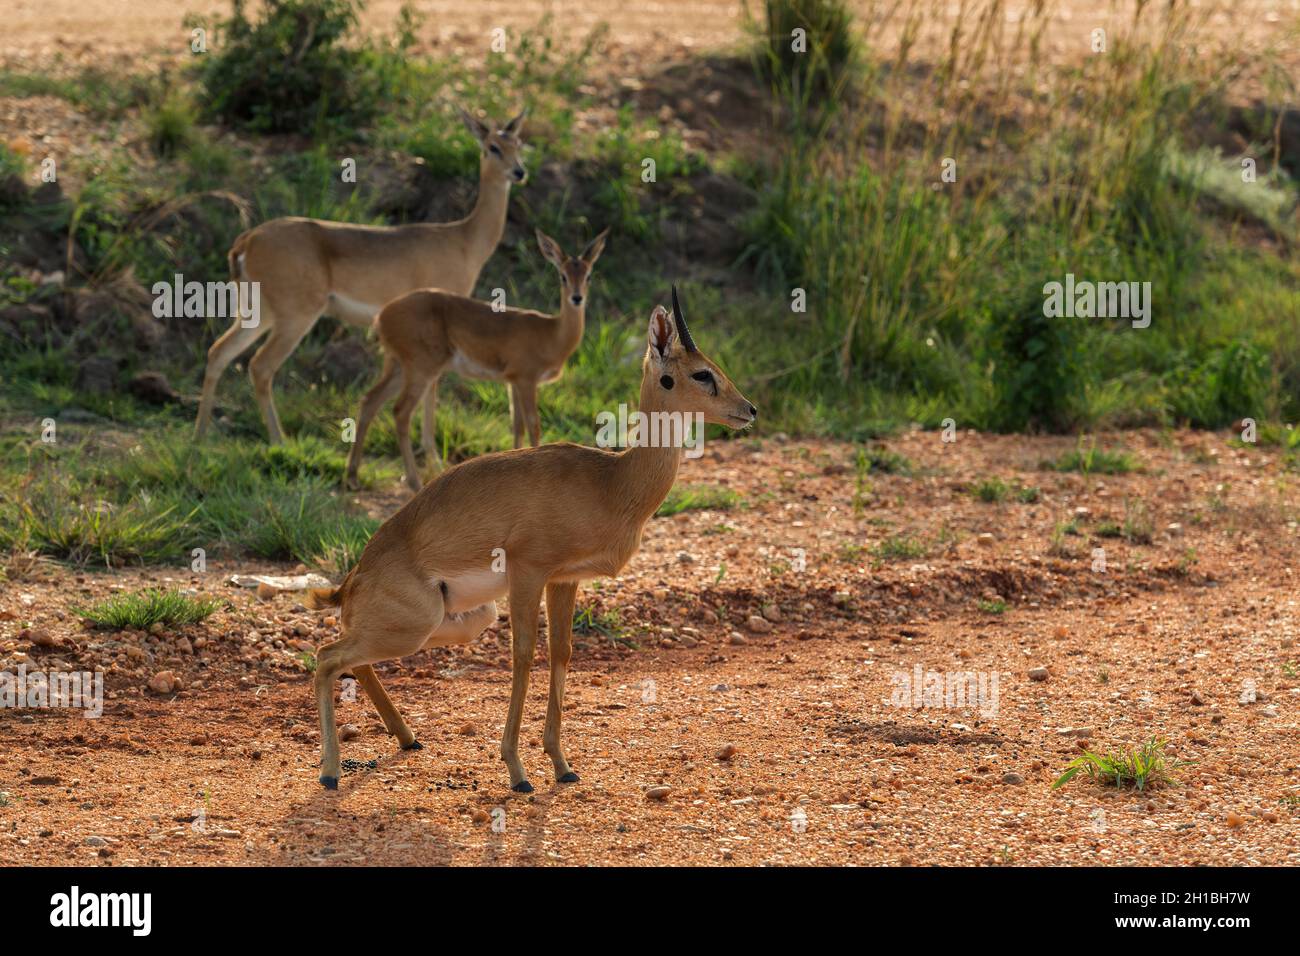 Oribi - Ourebia ourebi, small antelope from African bushes and savannahs, Murchison falls, Uganda. Stock Photo